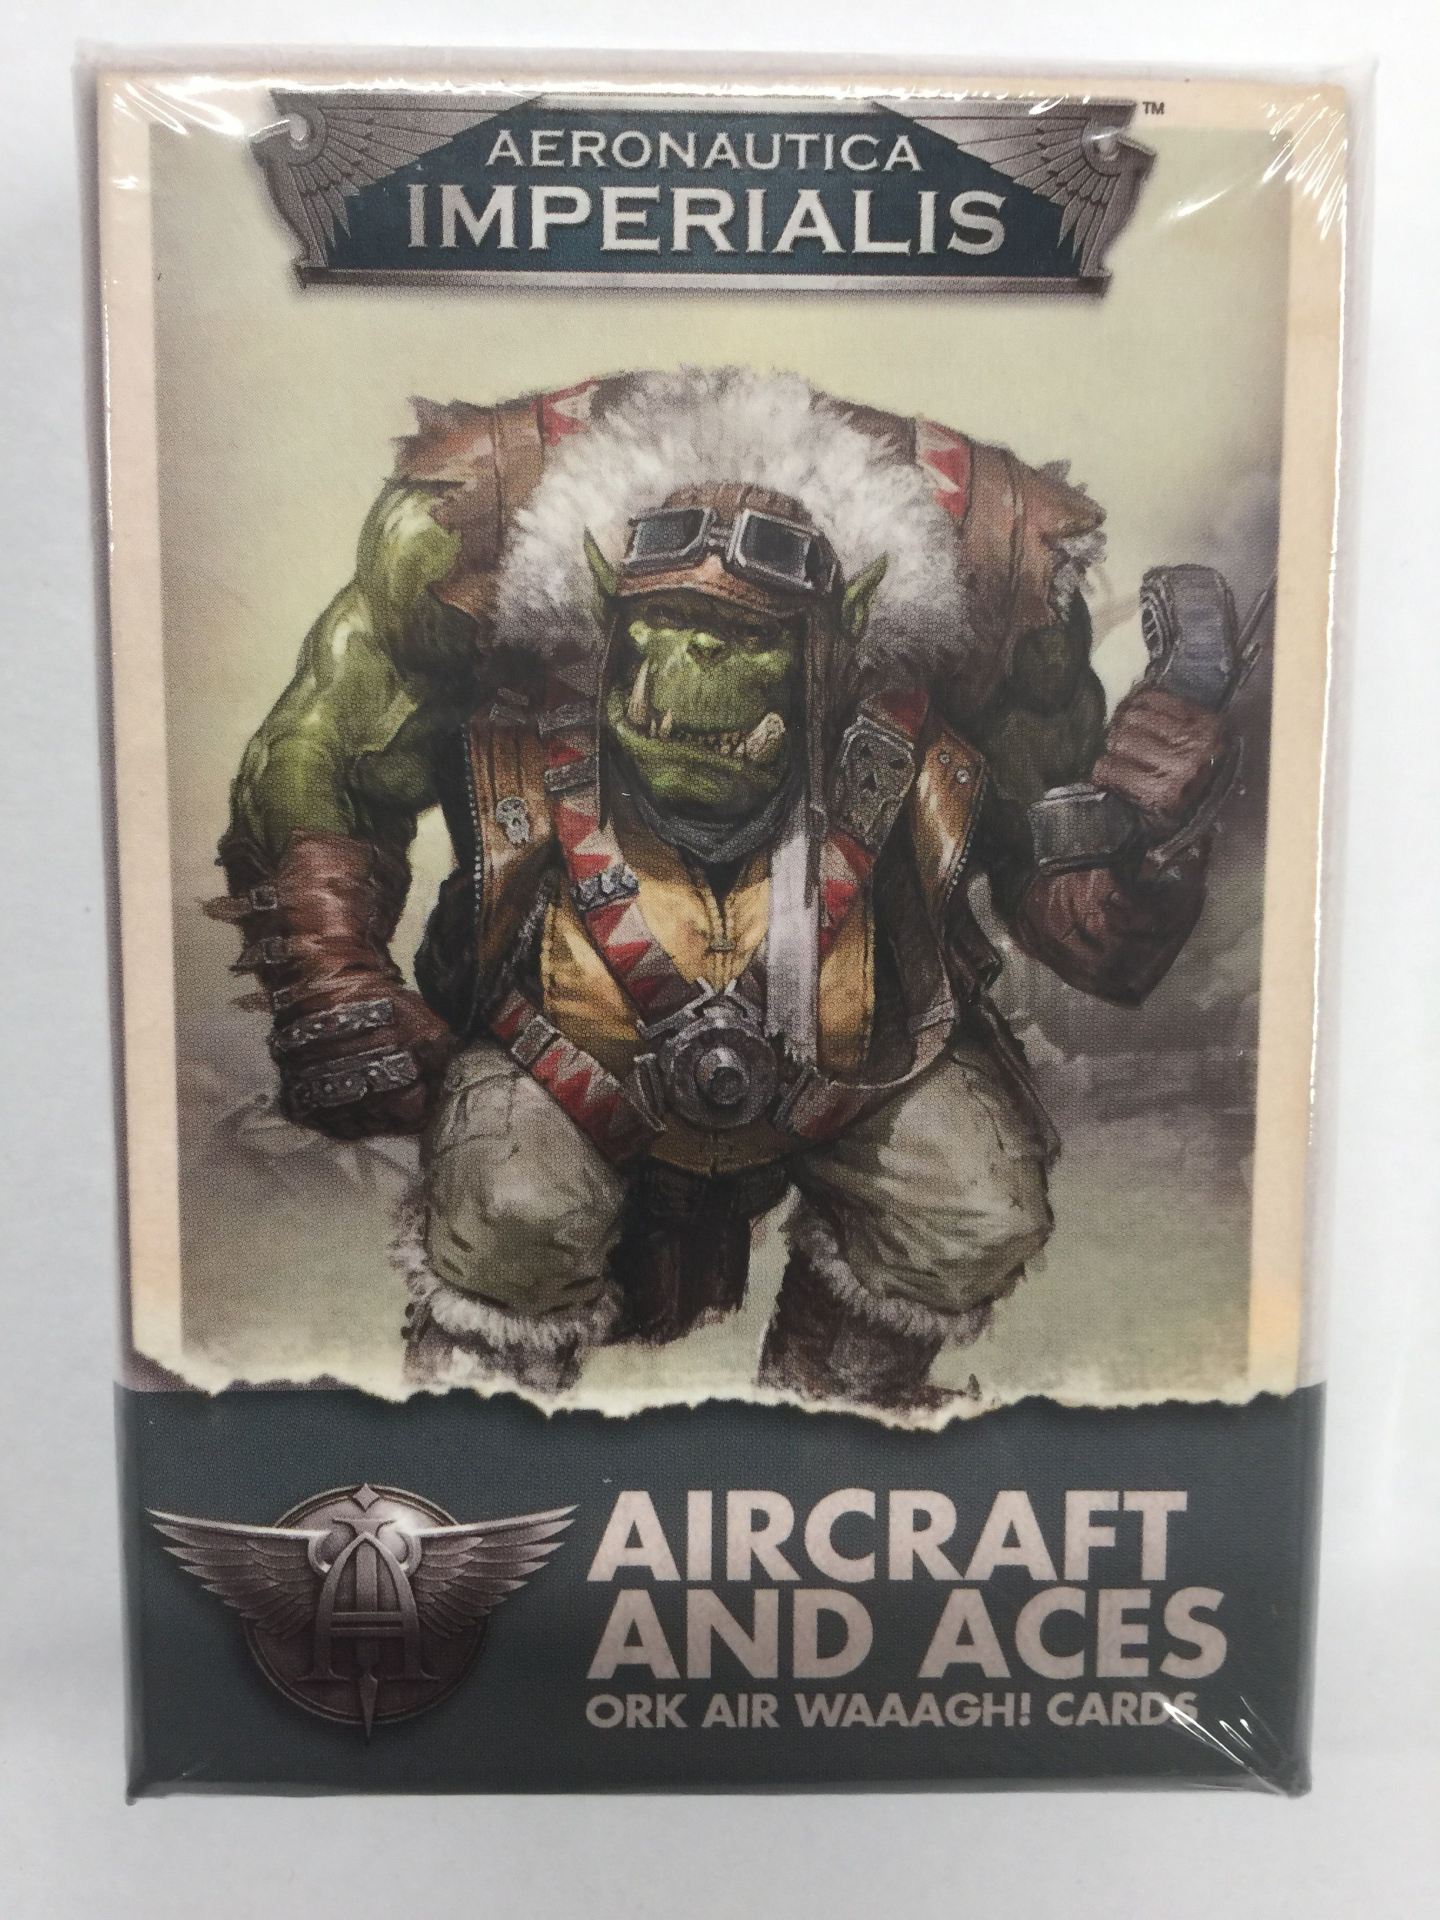 ORK AIR WAAAGH CARDS